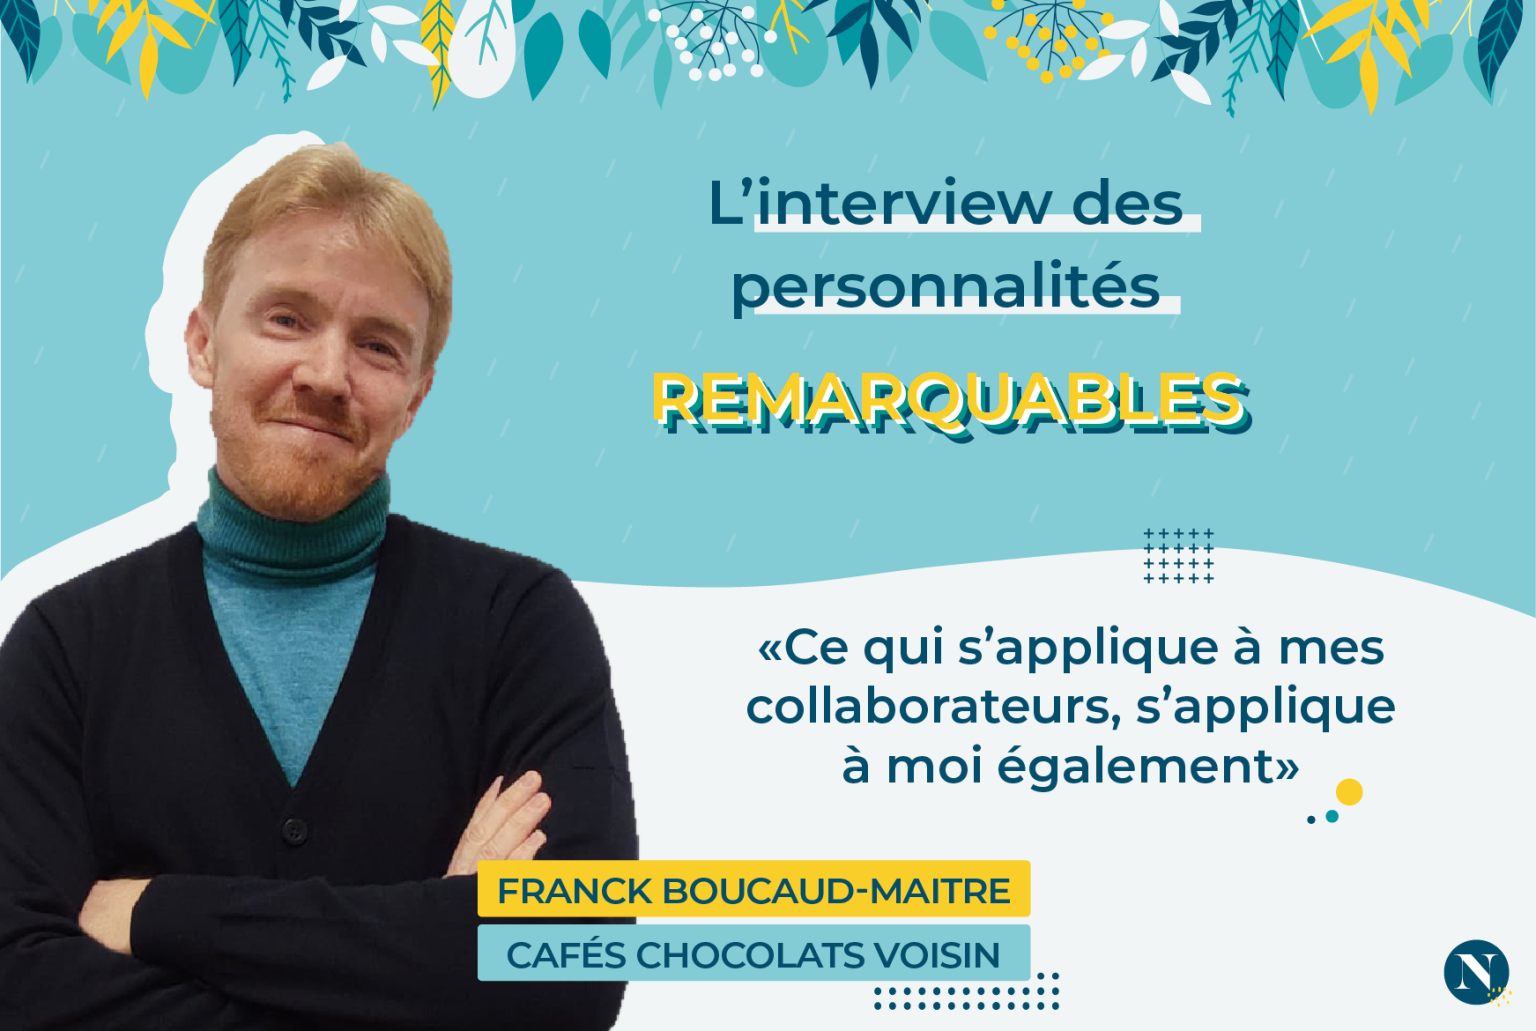 interview blog : Franck Boucaud-maitre